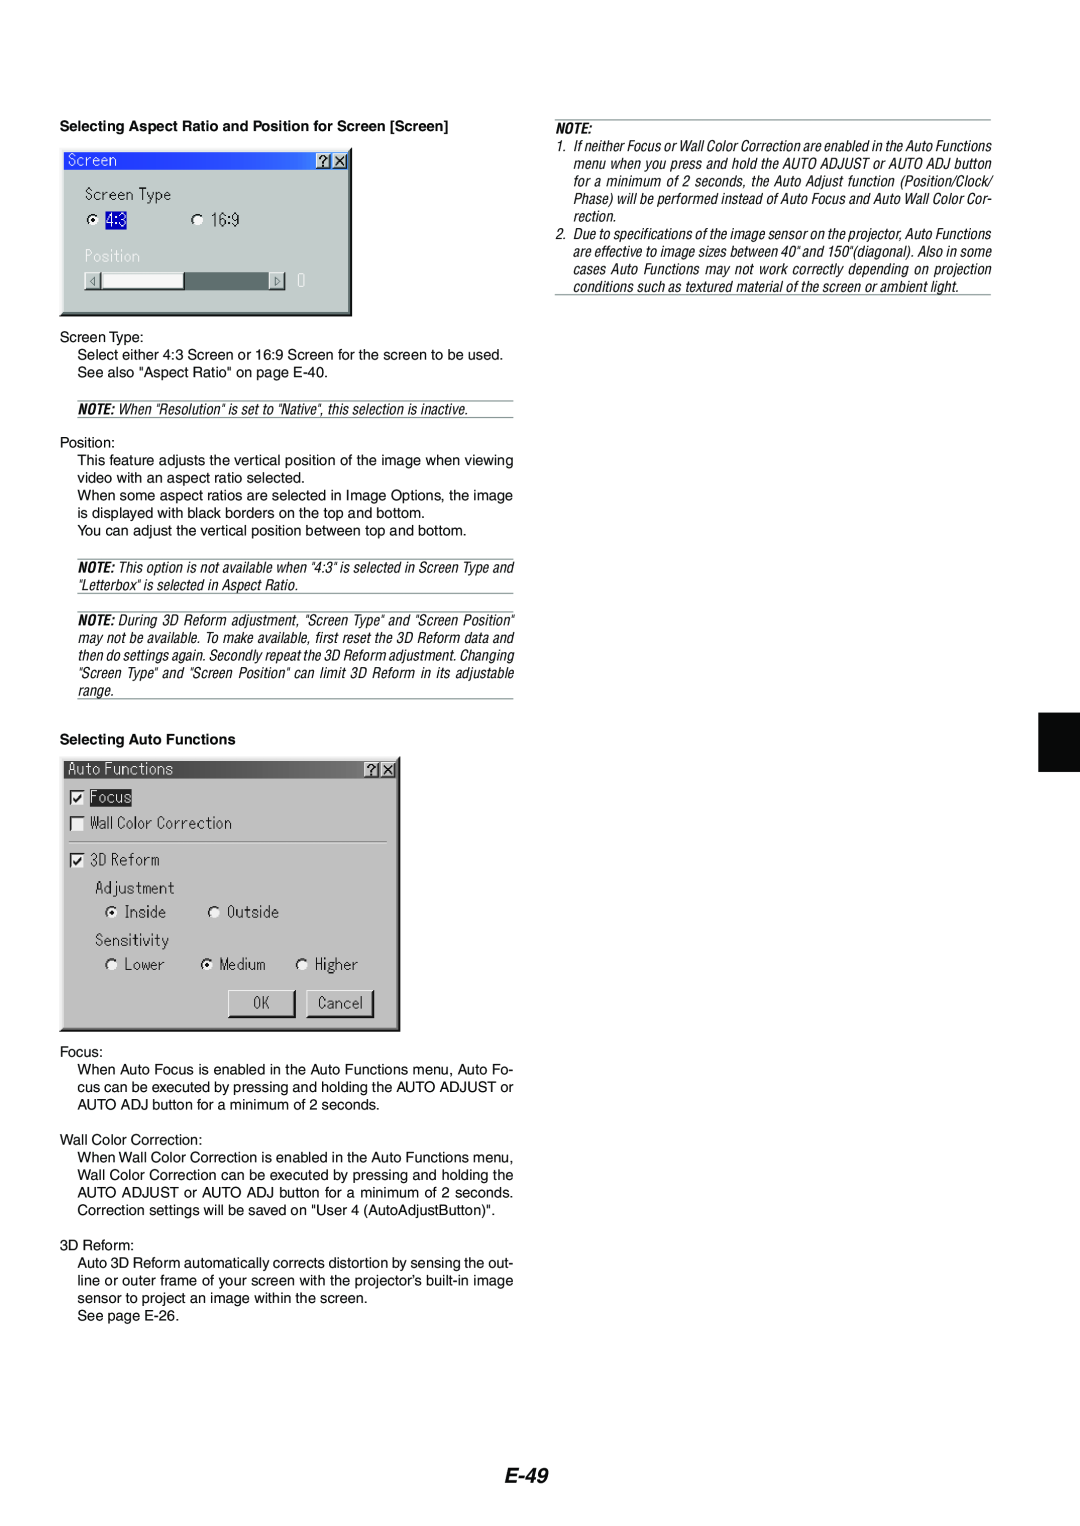 Kensington MT1065, MT1075 user manual E-49, Selecting Auto Functions 